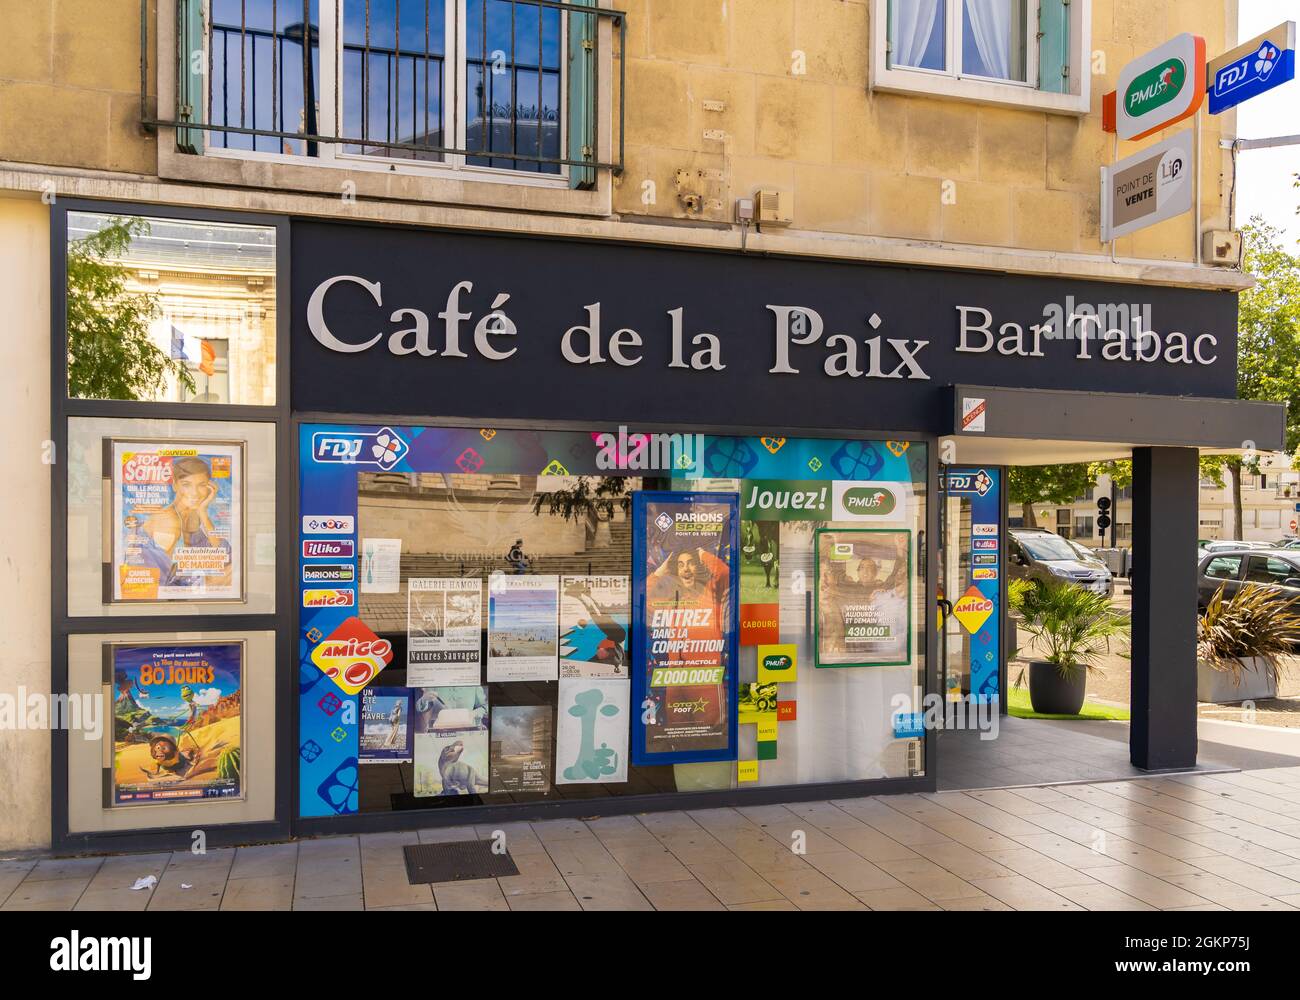 Le Havre, France - August 8, 2021: Street bar and kiosk Cafe de la paix at Le Havre, Normandy Stock Photo